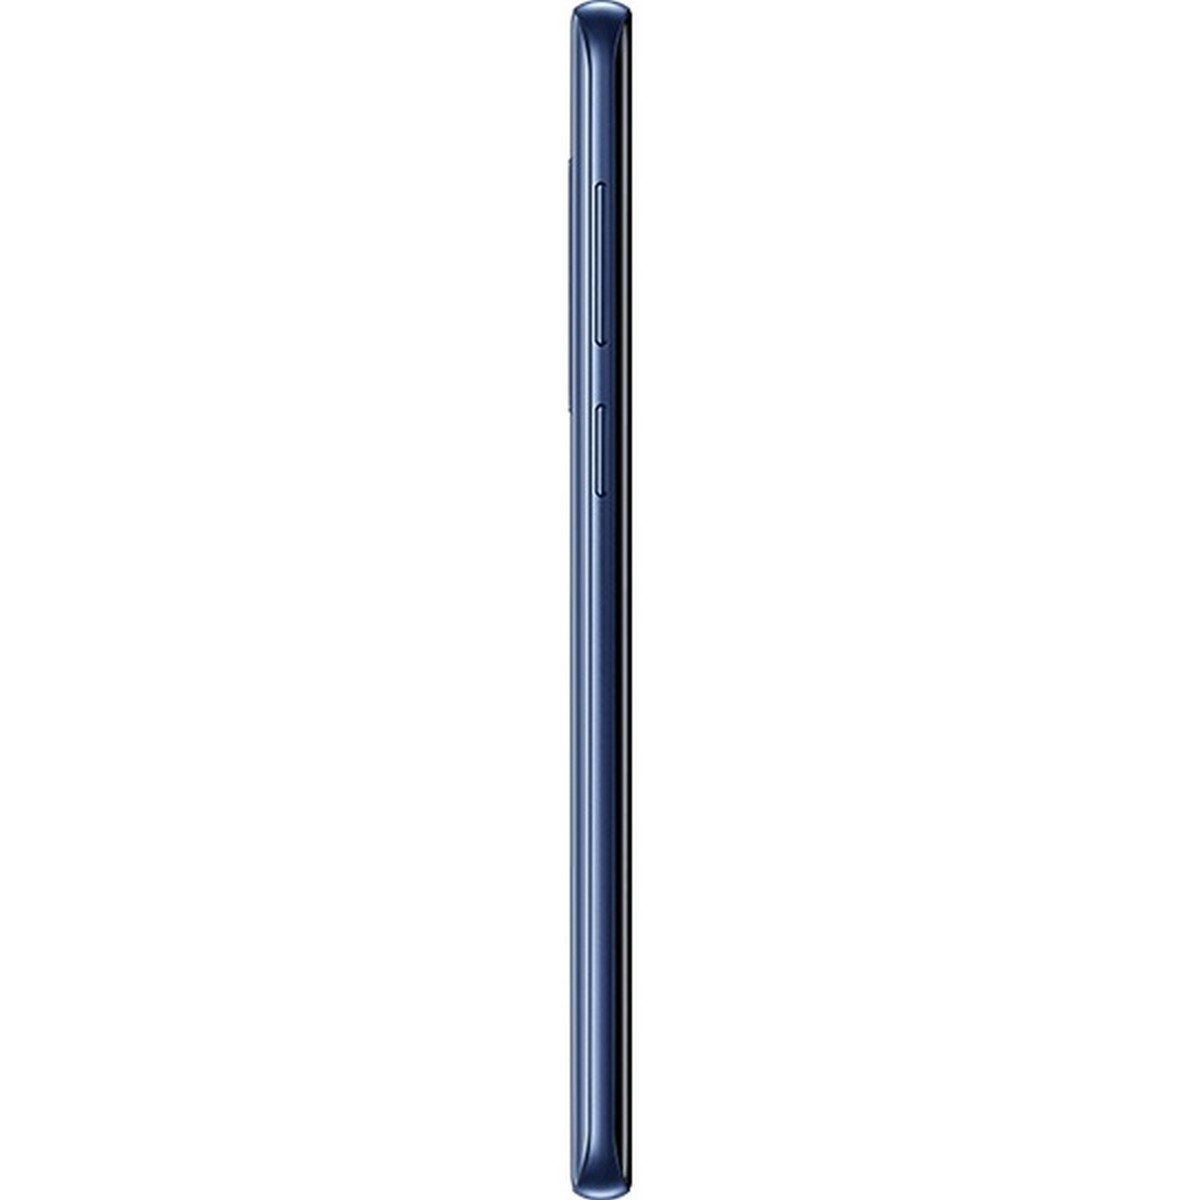 Samsung Galaxy S9 SMG960 64GB 4G Coral Blue